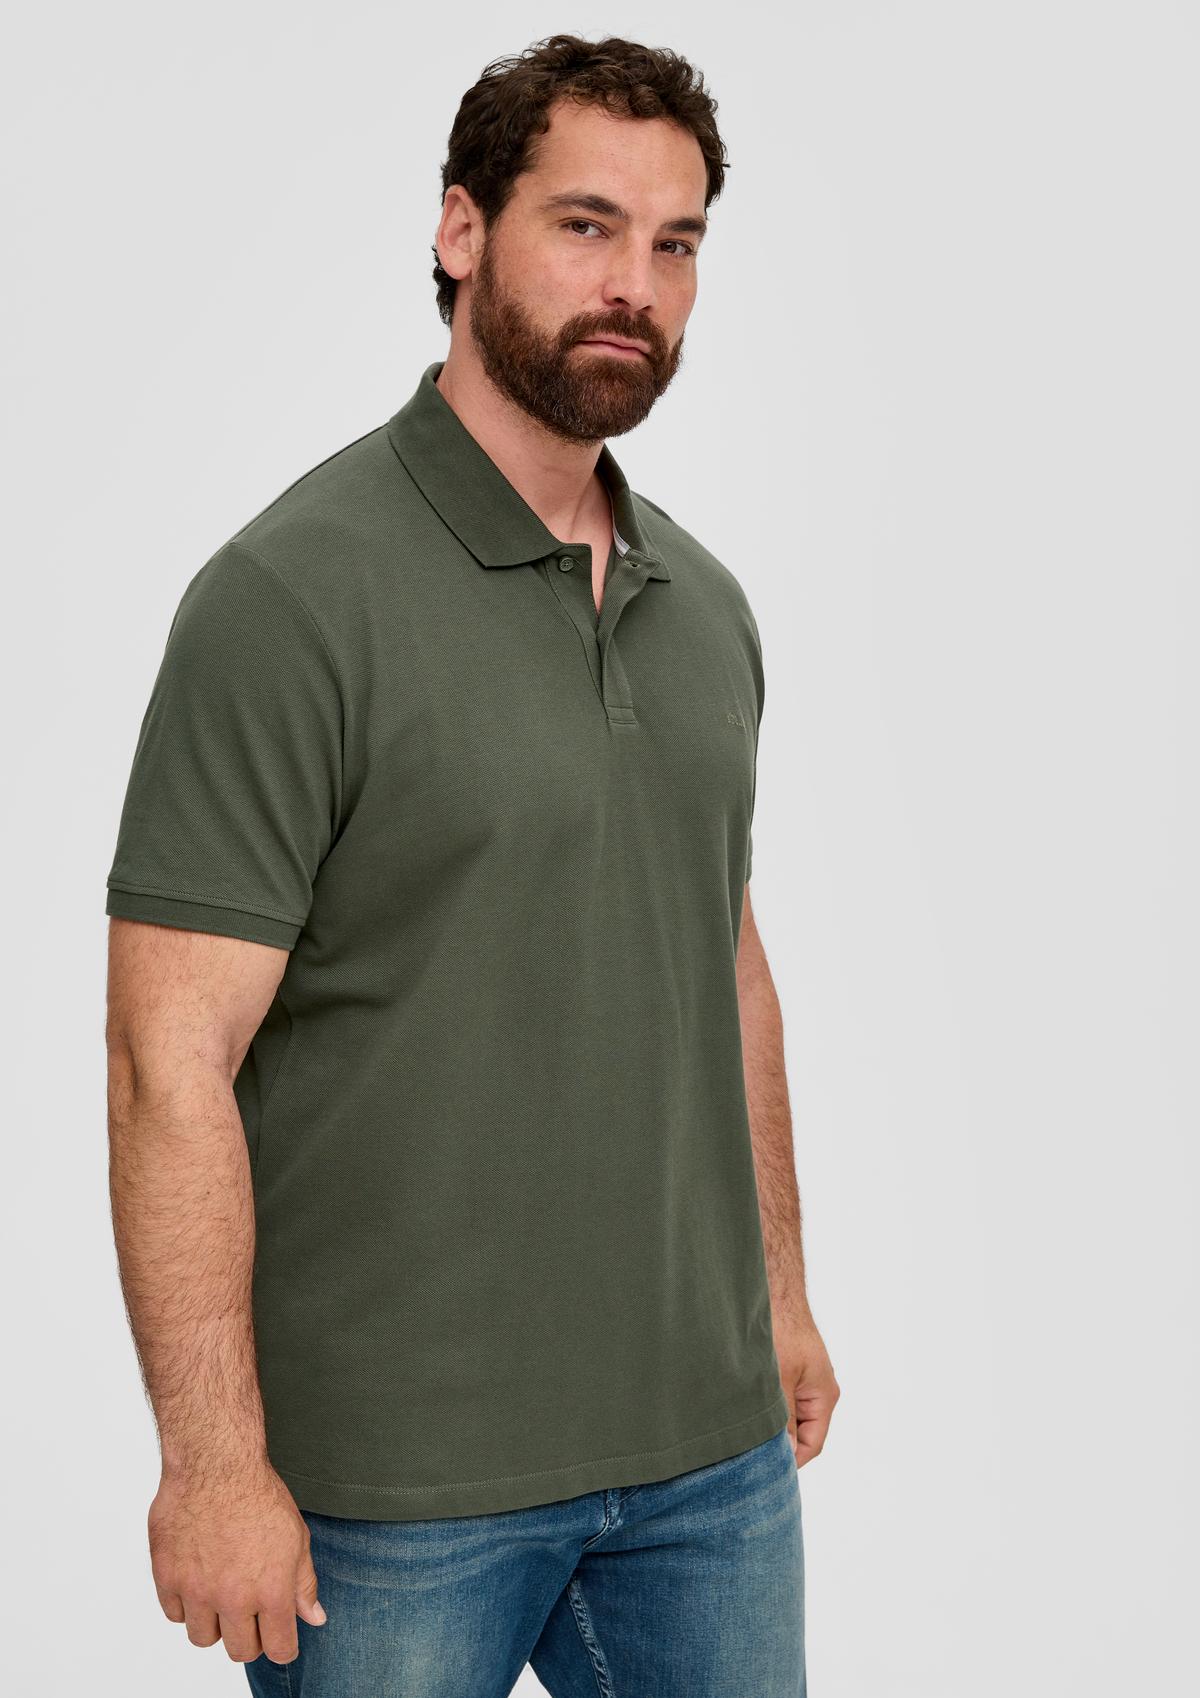 Polo shirt navy minimalist a print with 